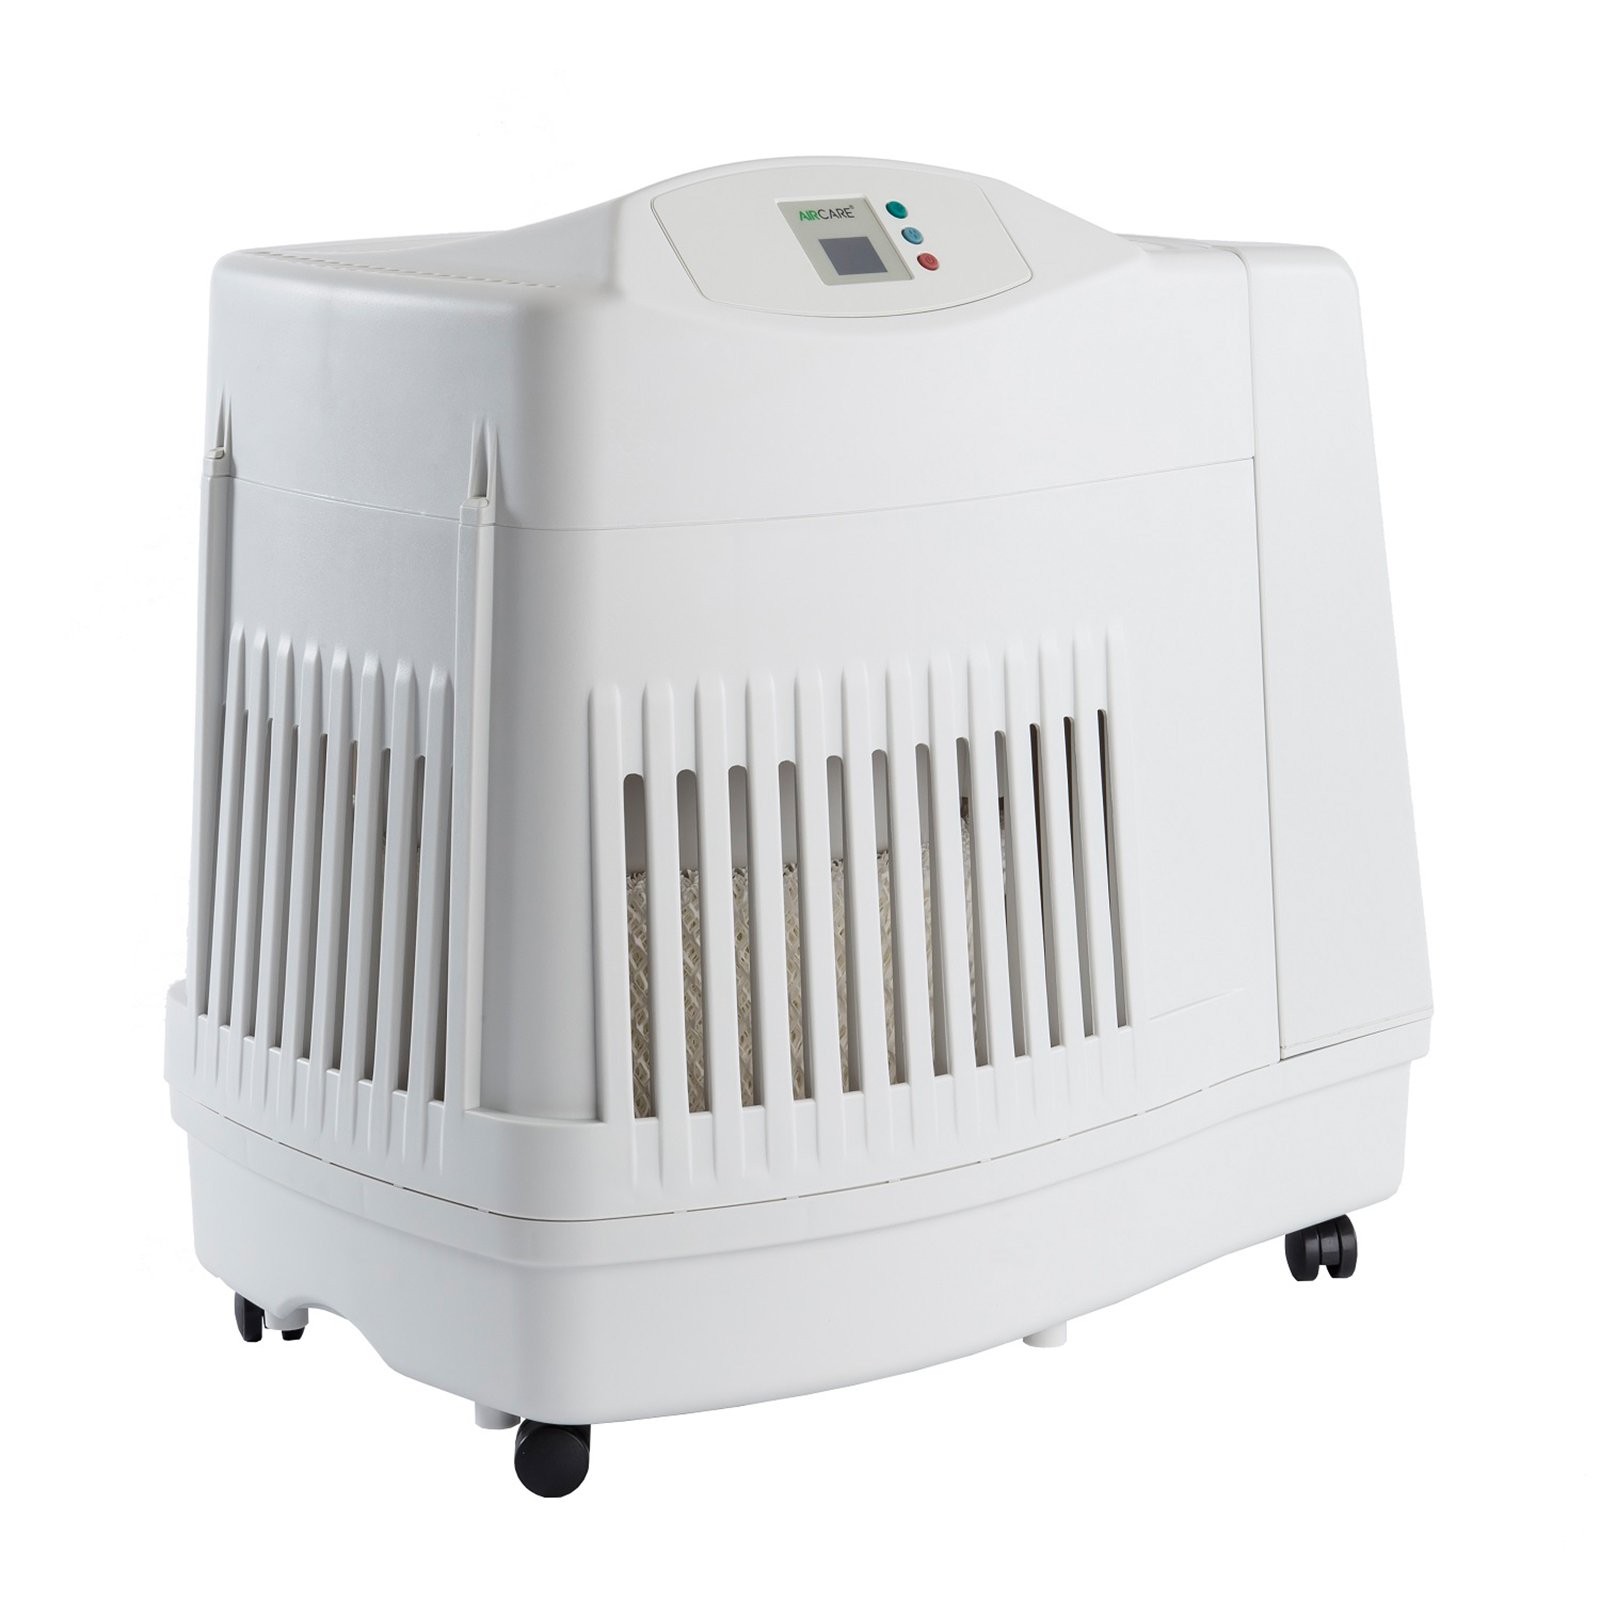 AIRCARE MA1201 Whole-House Console-Style Evaporative Humidifier, White - image 1 of 2